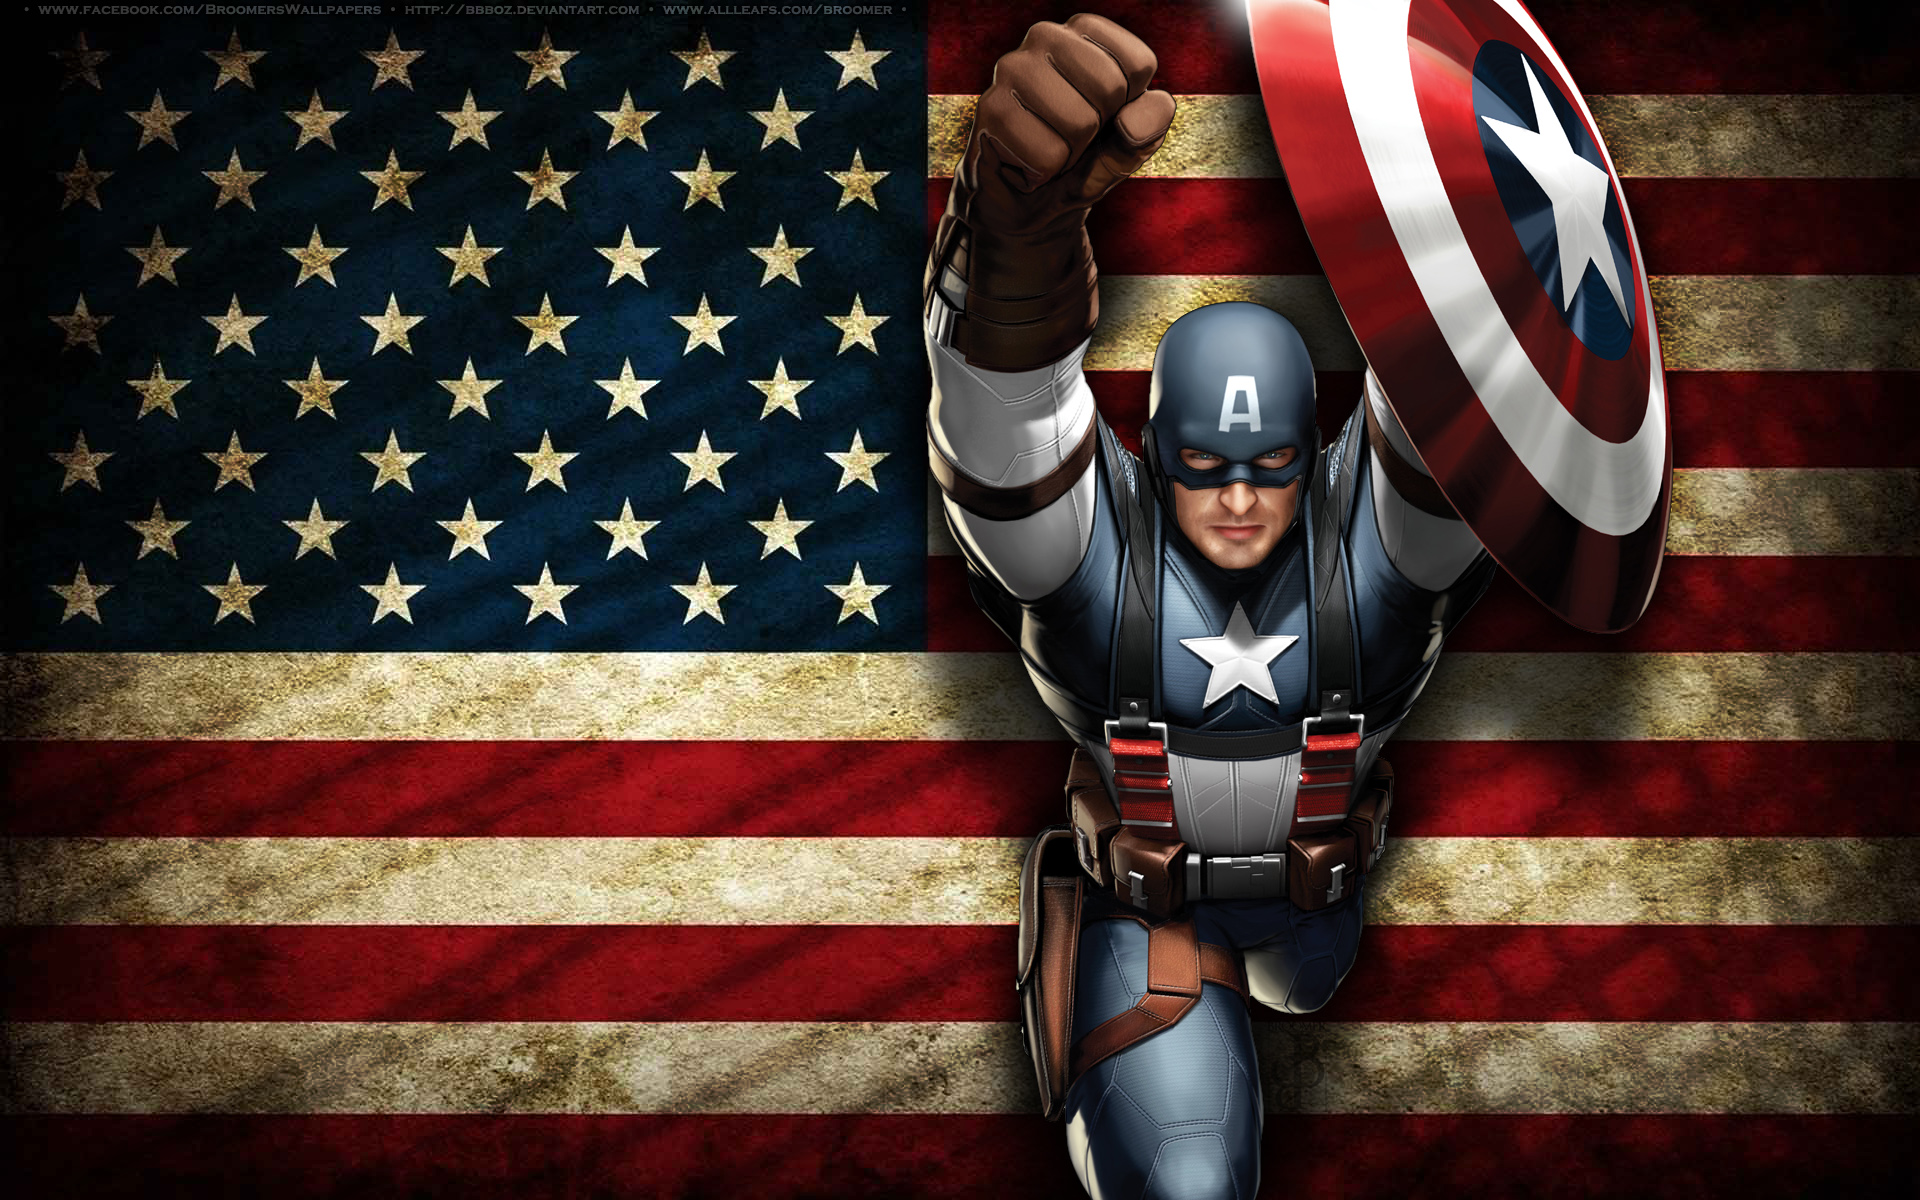 Captain America Comic Super Hero USA Flag Costume Boomerang Shield Metal Sign